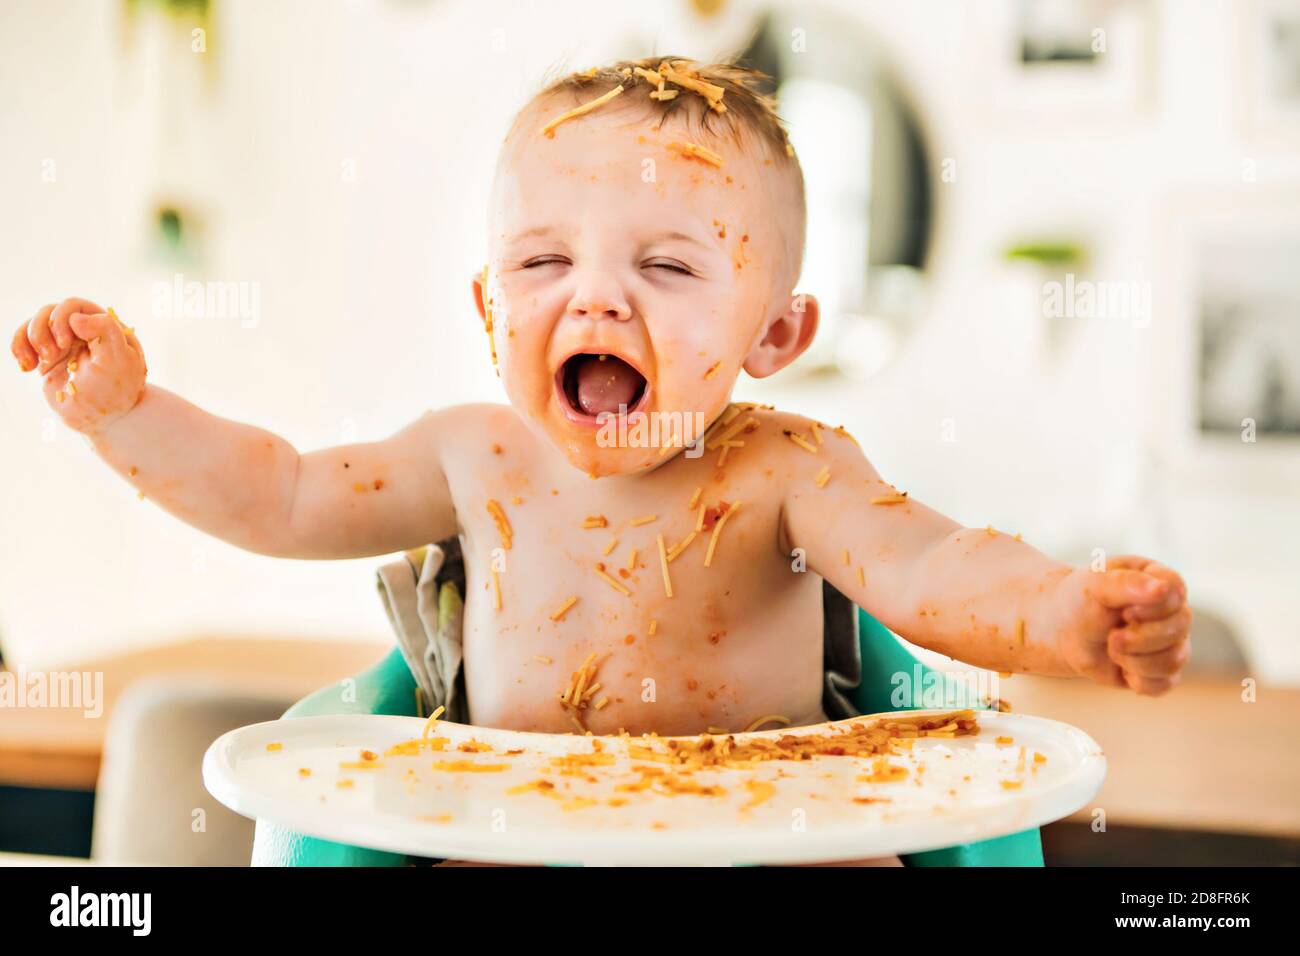 https://c8.alamy.com/comp/2D8FR6K/little-baby-boy-eating-her-dinner-and-making-a-mess-2D8FR6K.jpg